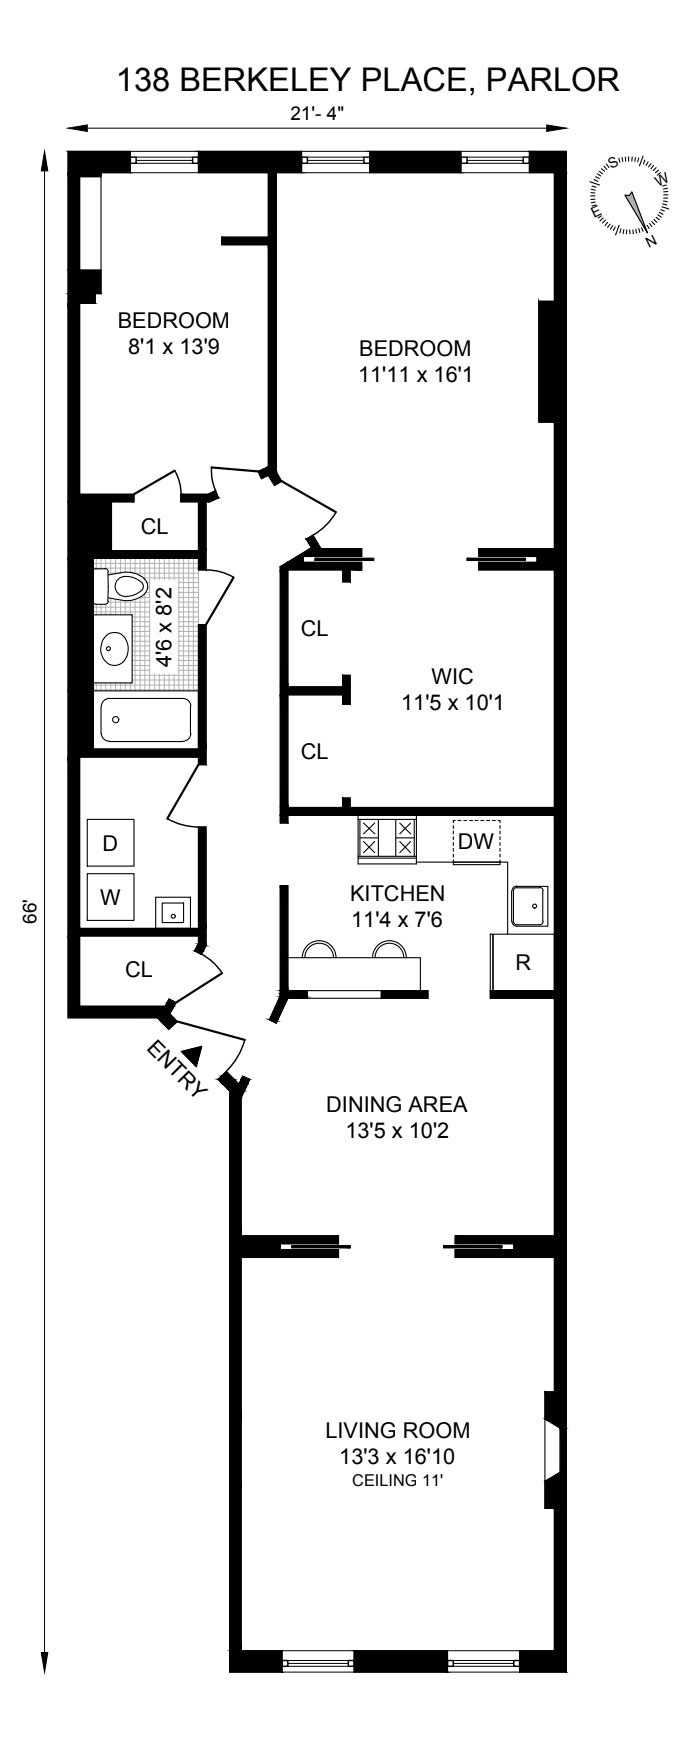 Floorplan for 138 Berkeley Place, PARLOR